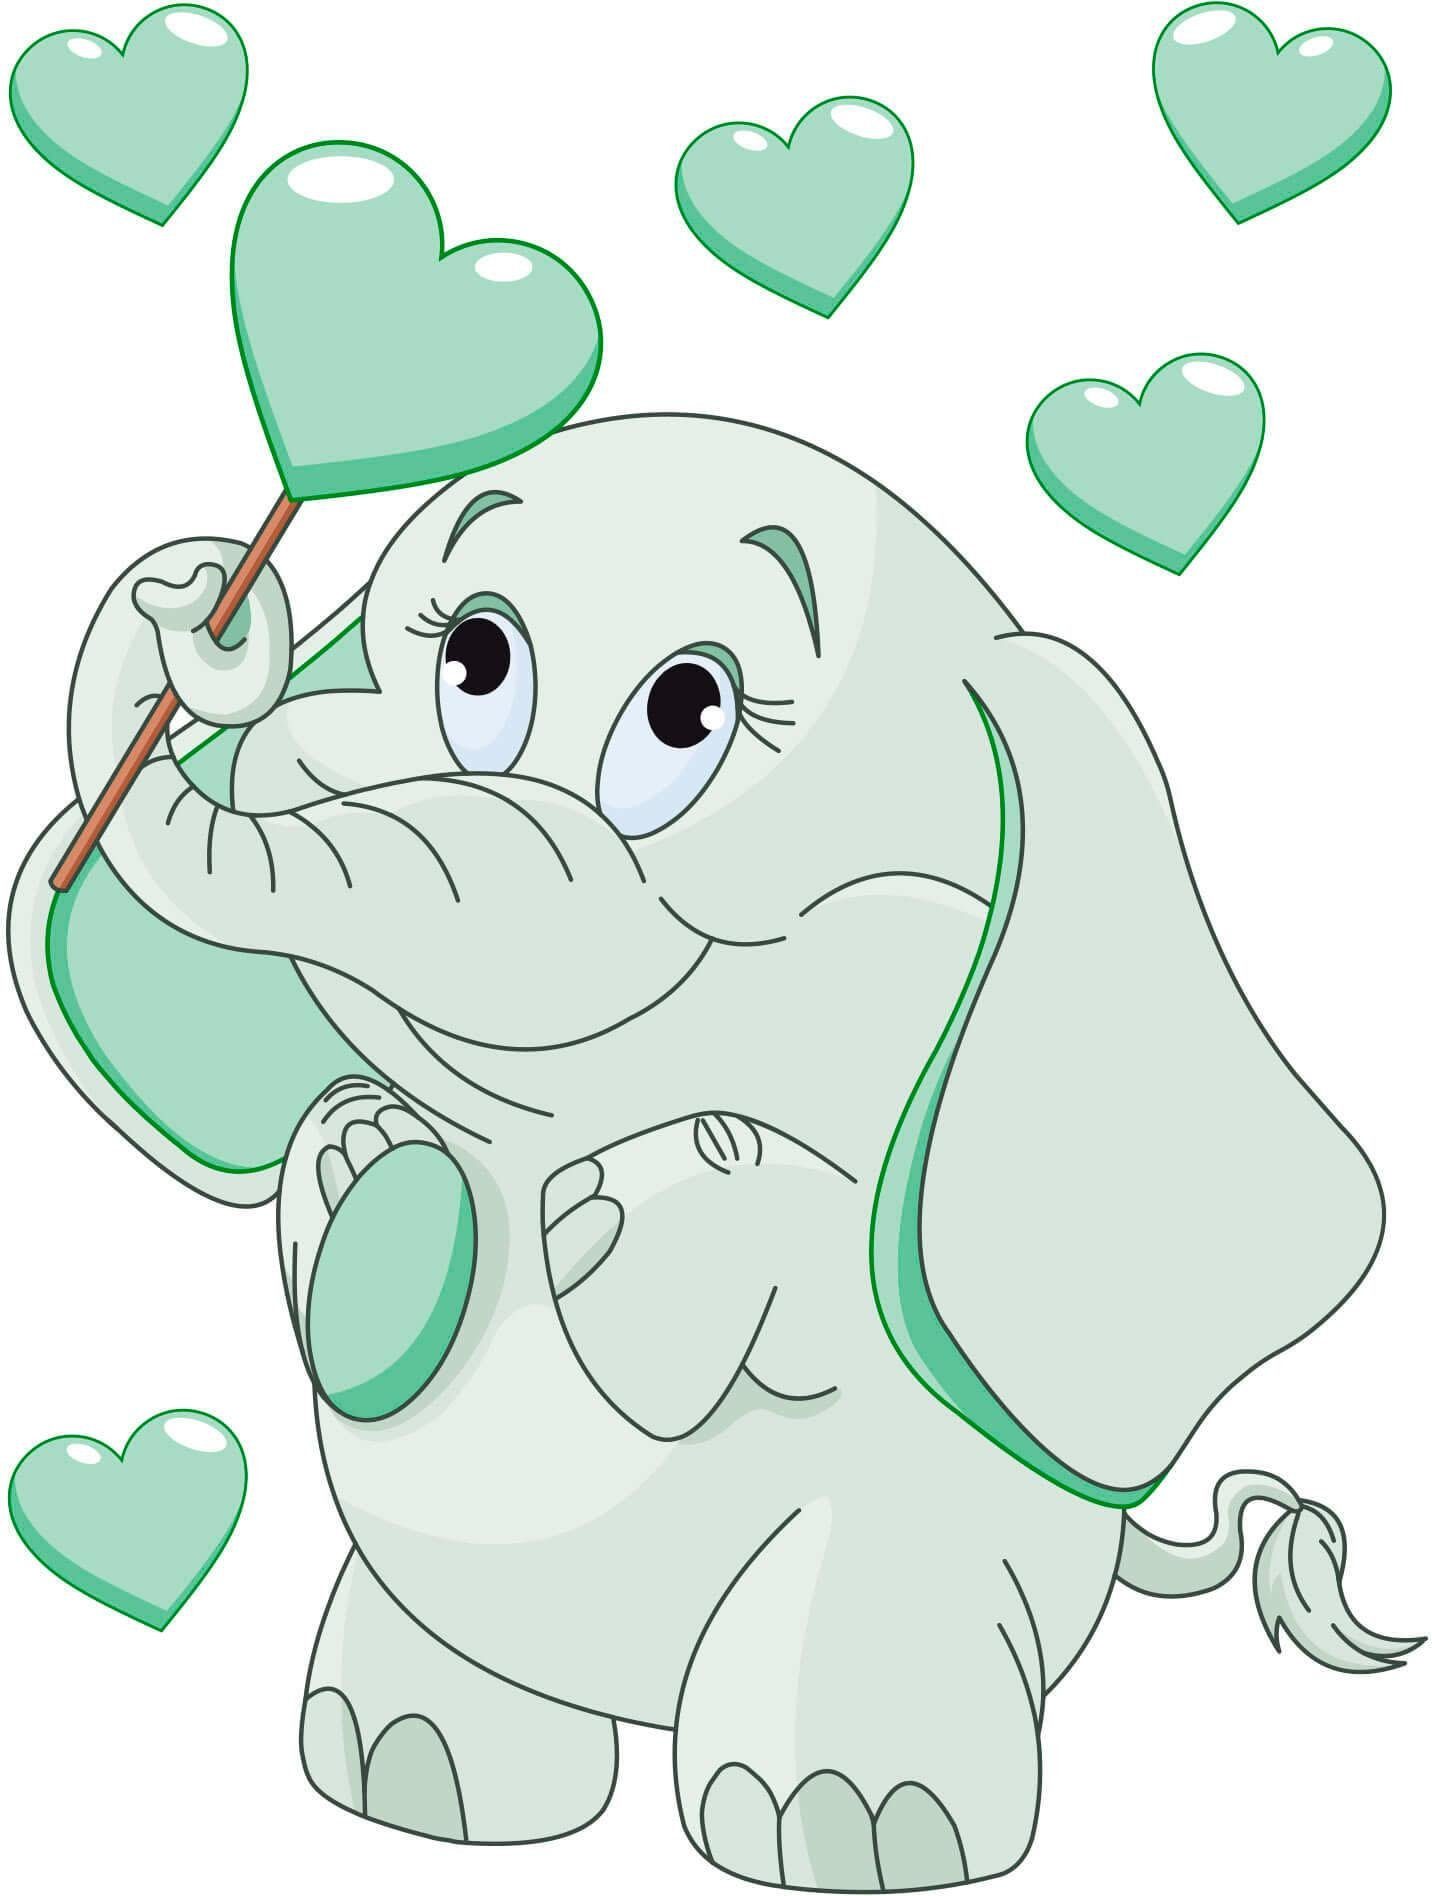 Wall-Art Wandtattoo Elefantenbaby mit Herzen Leuchtsticker + grün